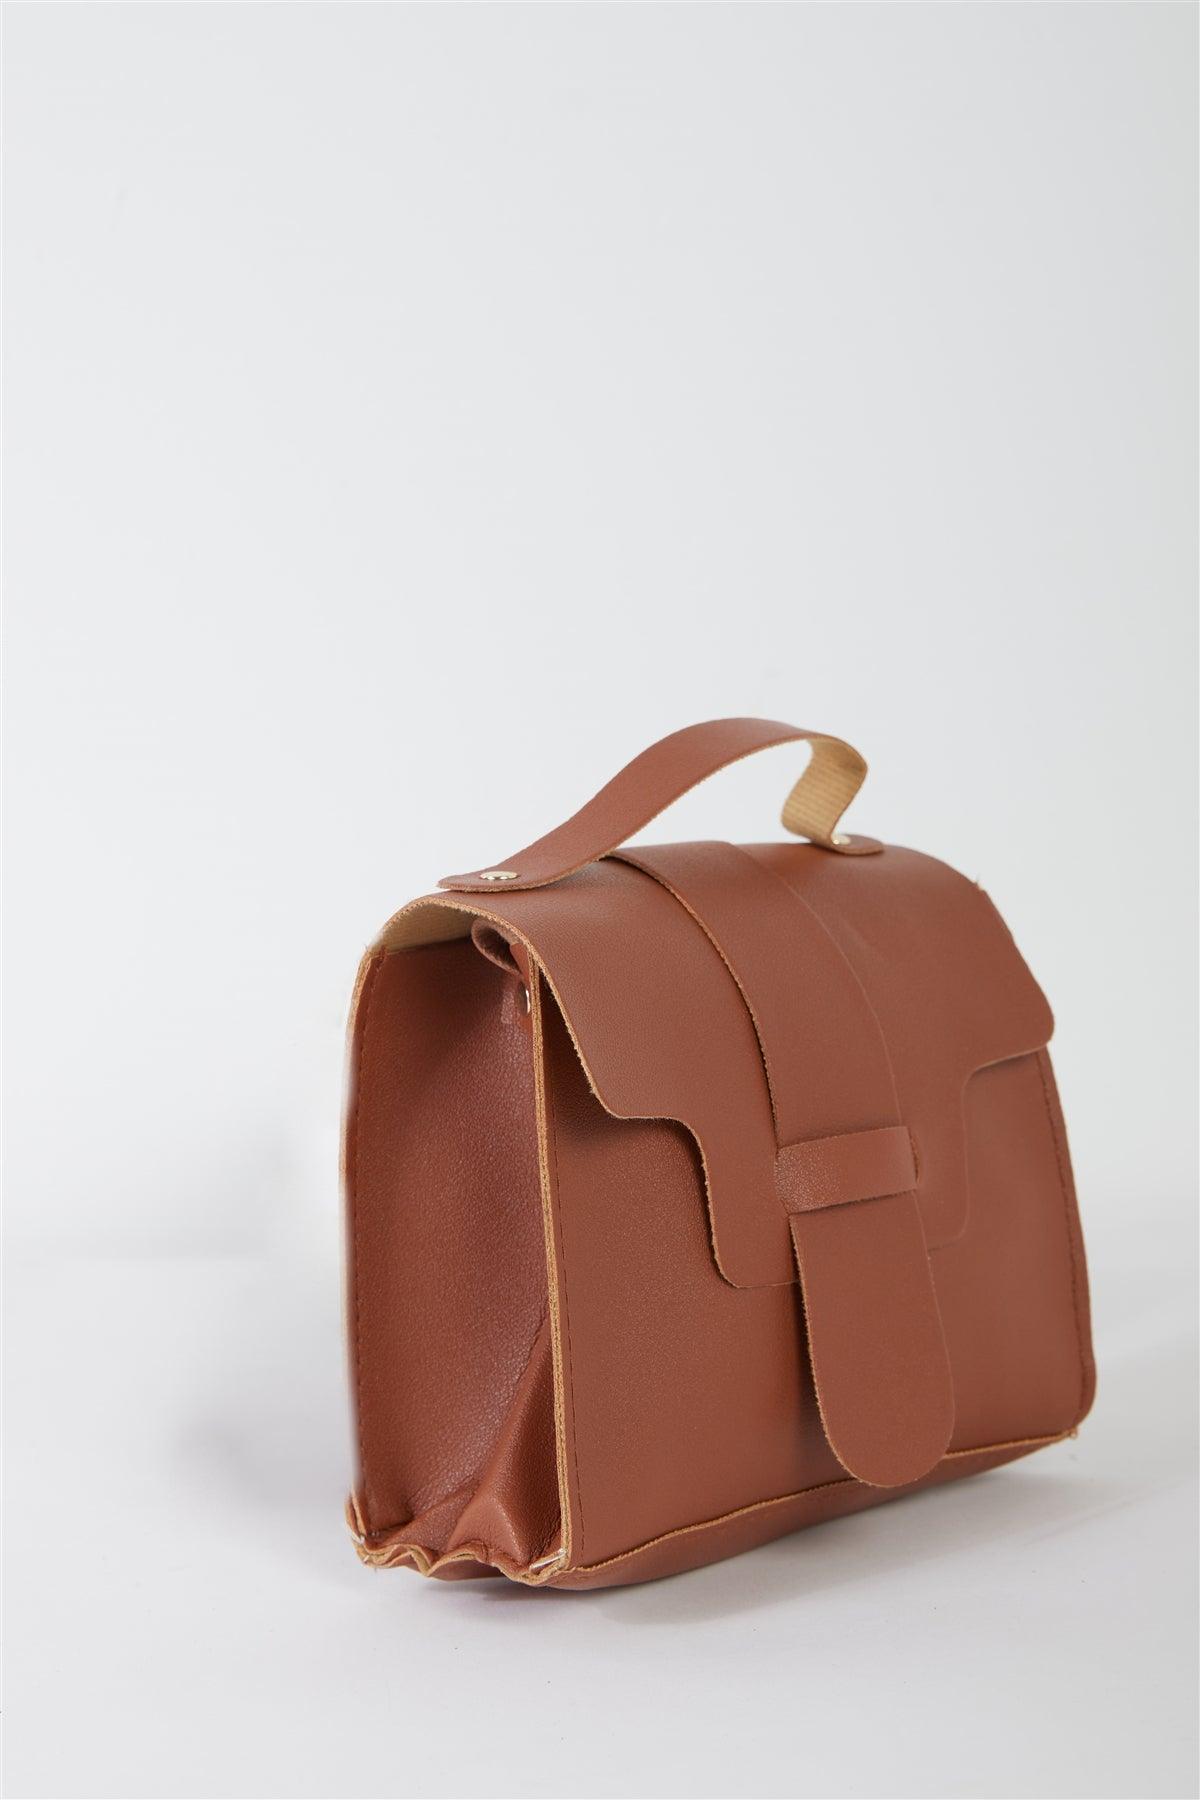 Camel Vegan Leather Buckle Comfortable Crossbody Flap Satchel Handbag /3 Bags